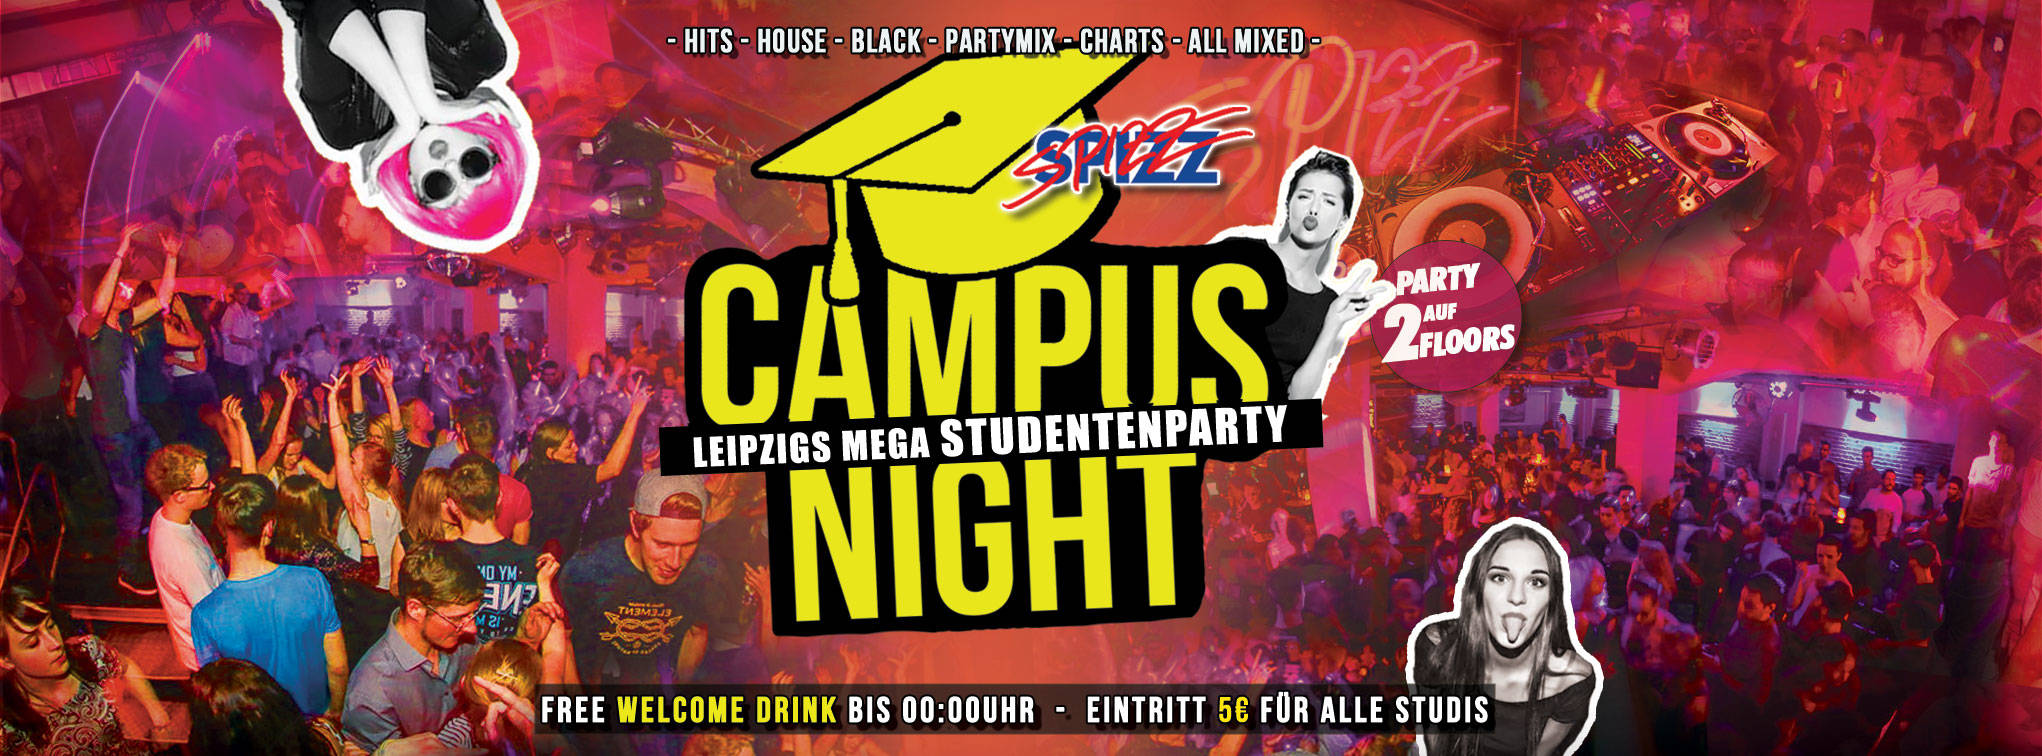 Campus Night - Leipzigs Mega Studentenparty - SPIZZ Leipzig!